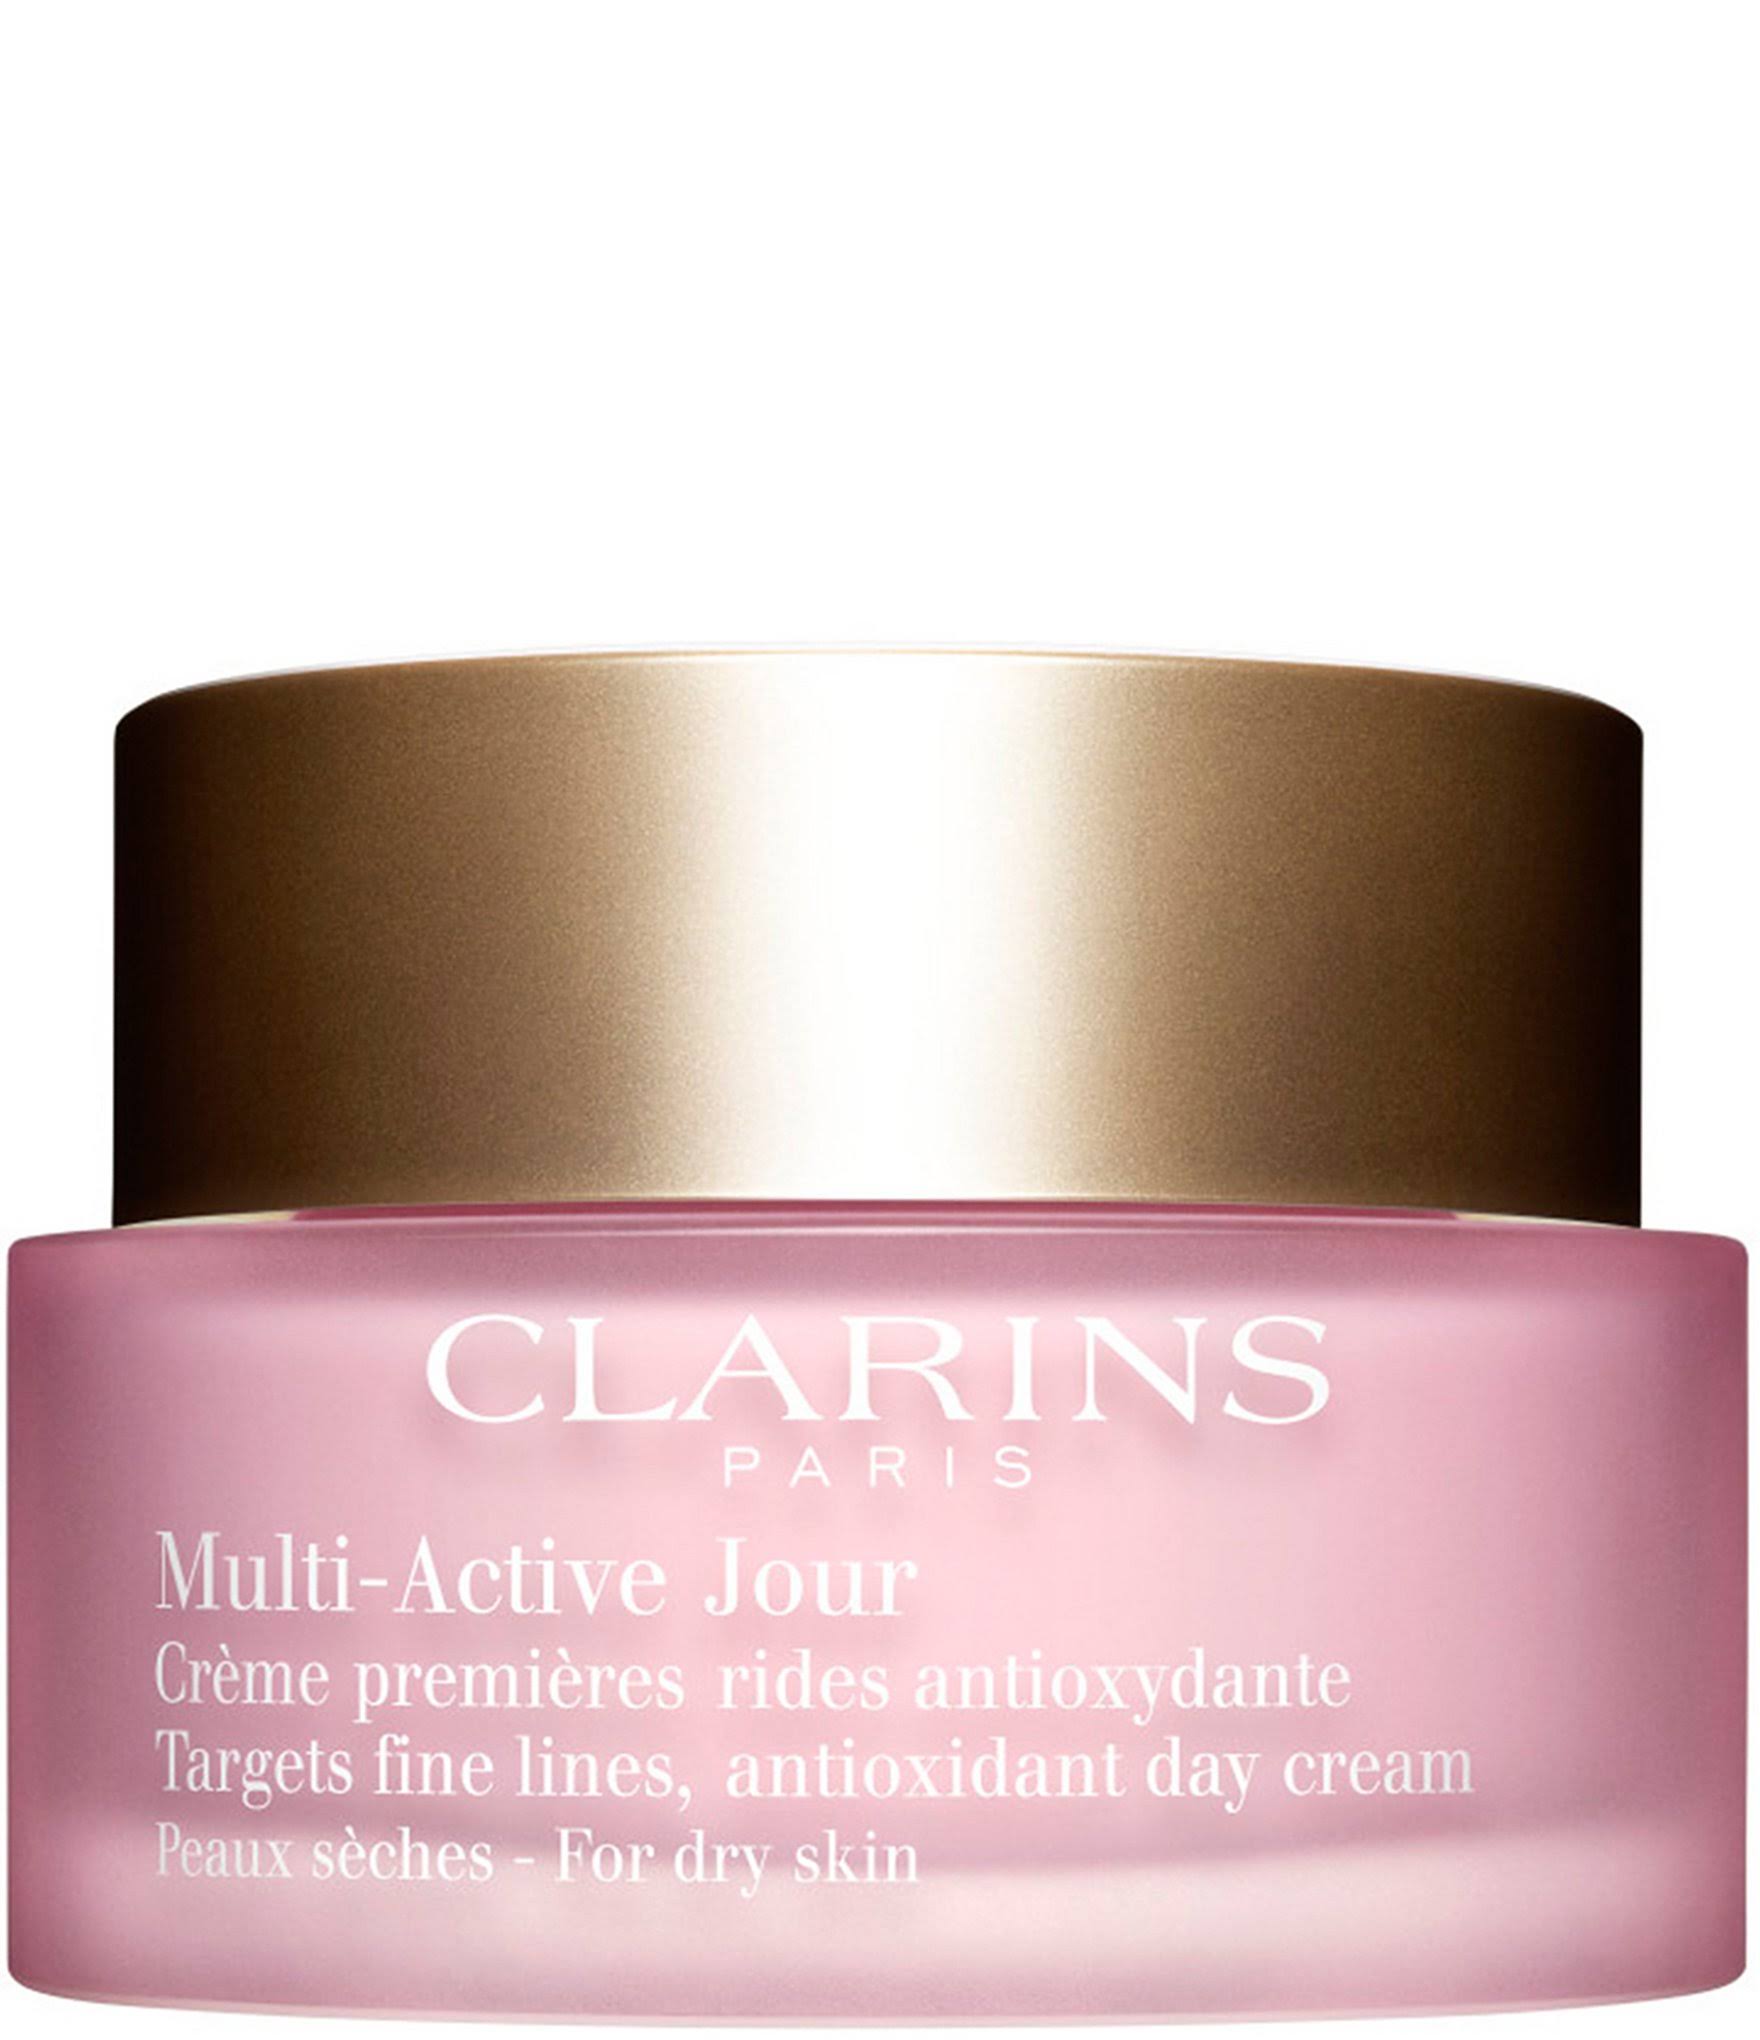 Clarins Multi-Active Day Cream - Dry Skin - 1.6 oz.